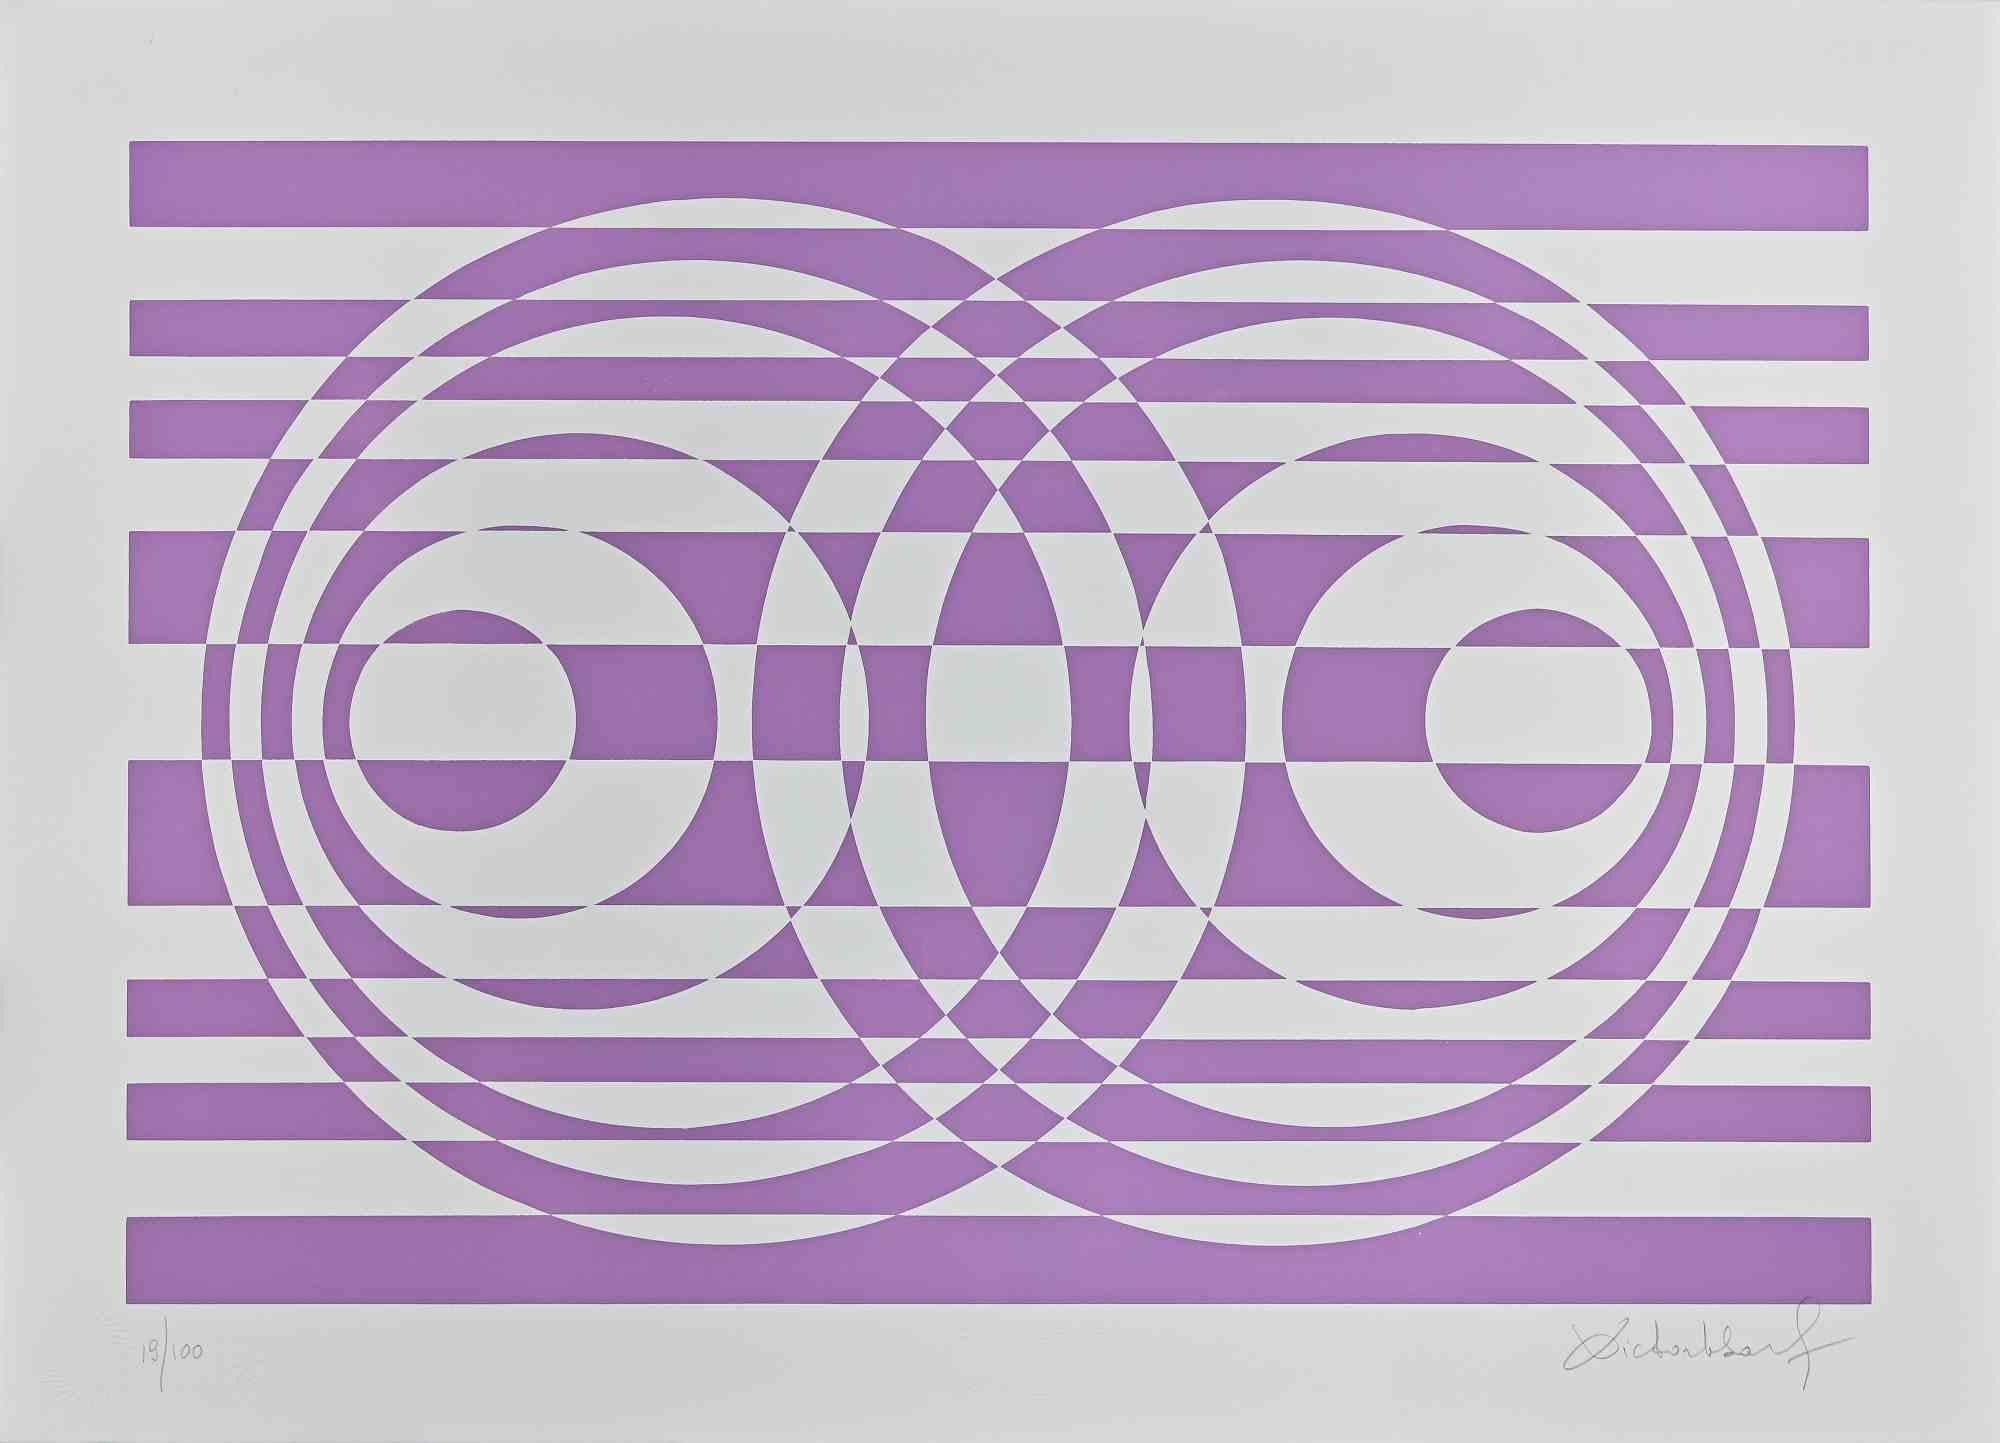 Composition abstraite violette - Impression sérigraphiée de V. Debach - 1970